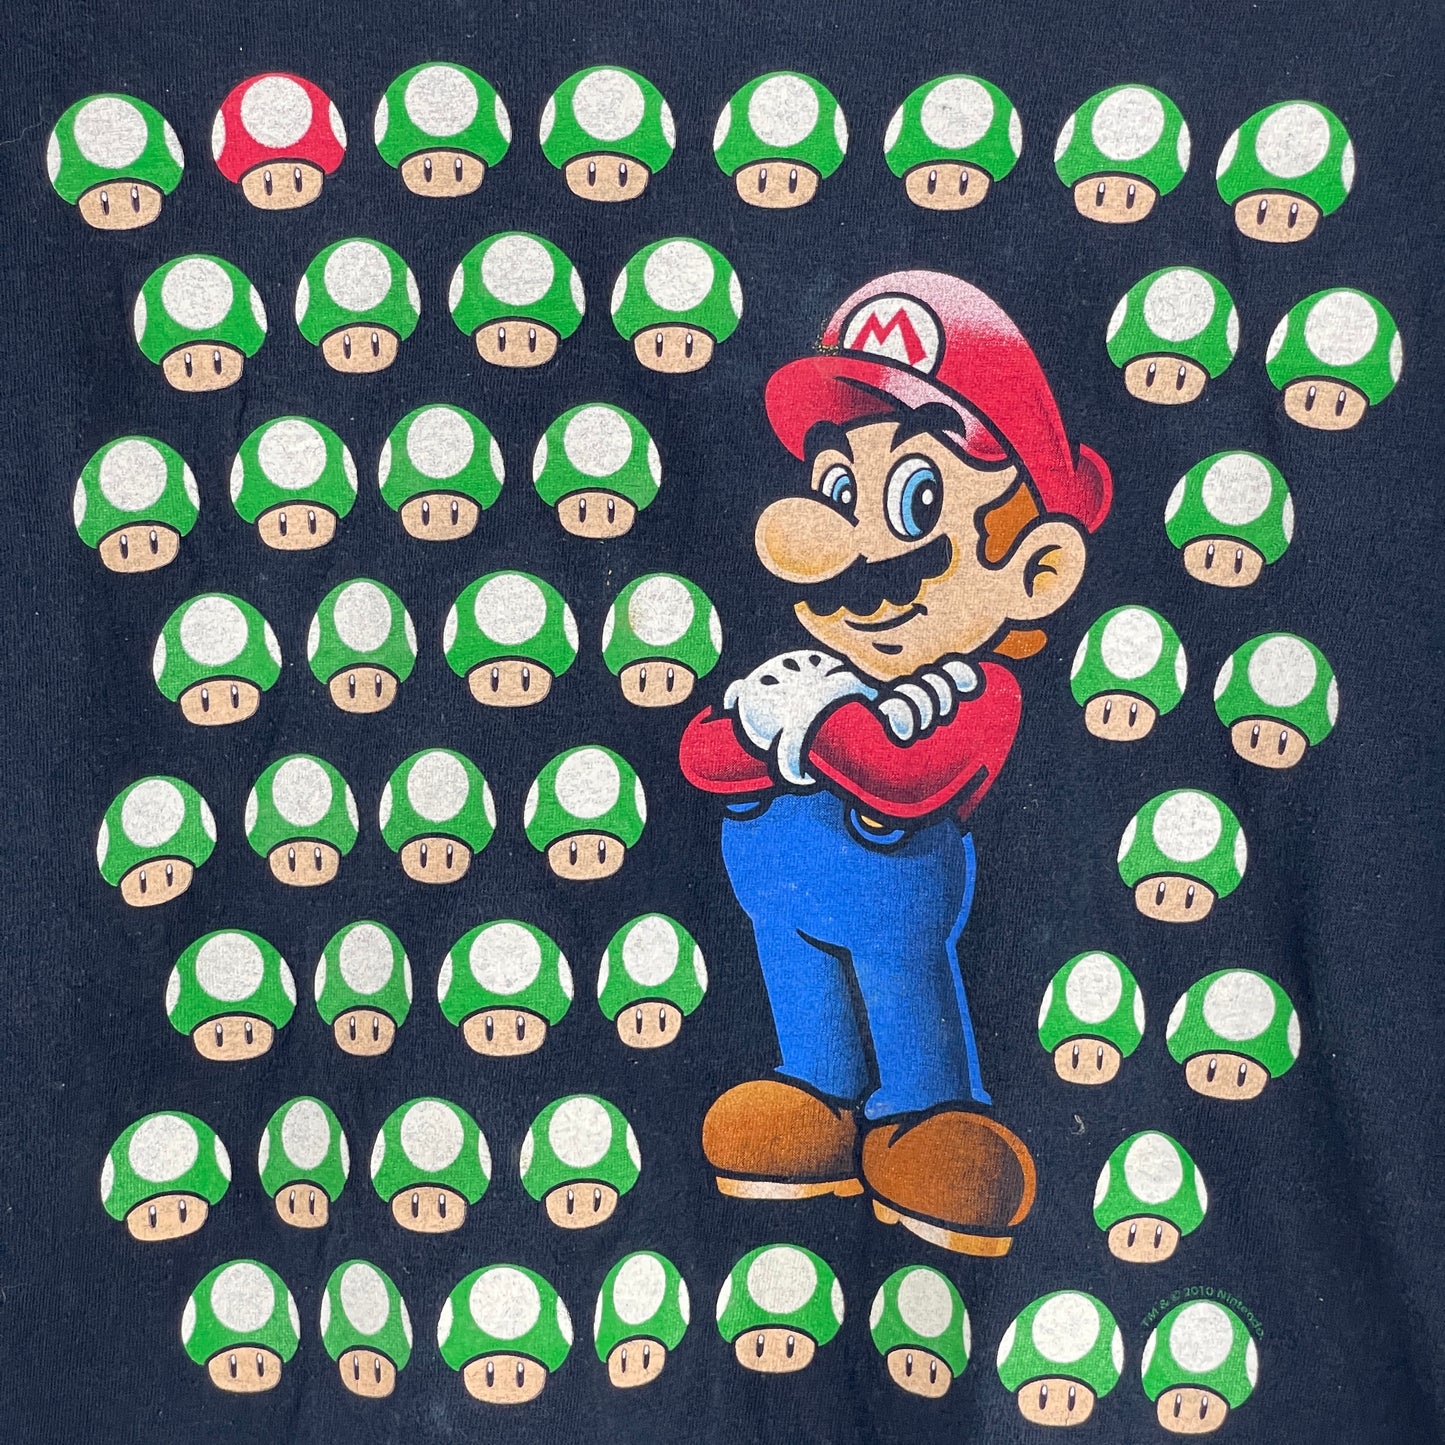 Super Mario 2010 Nintendo Game T-shirt